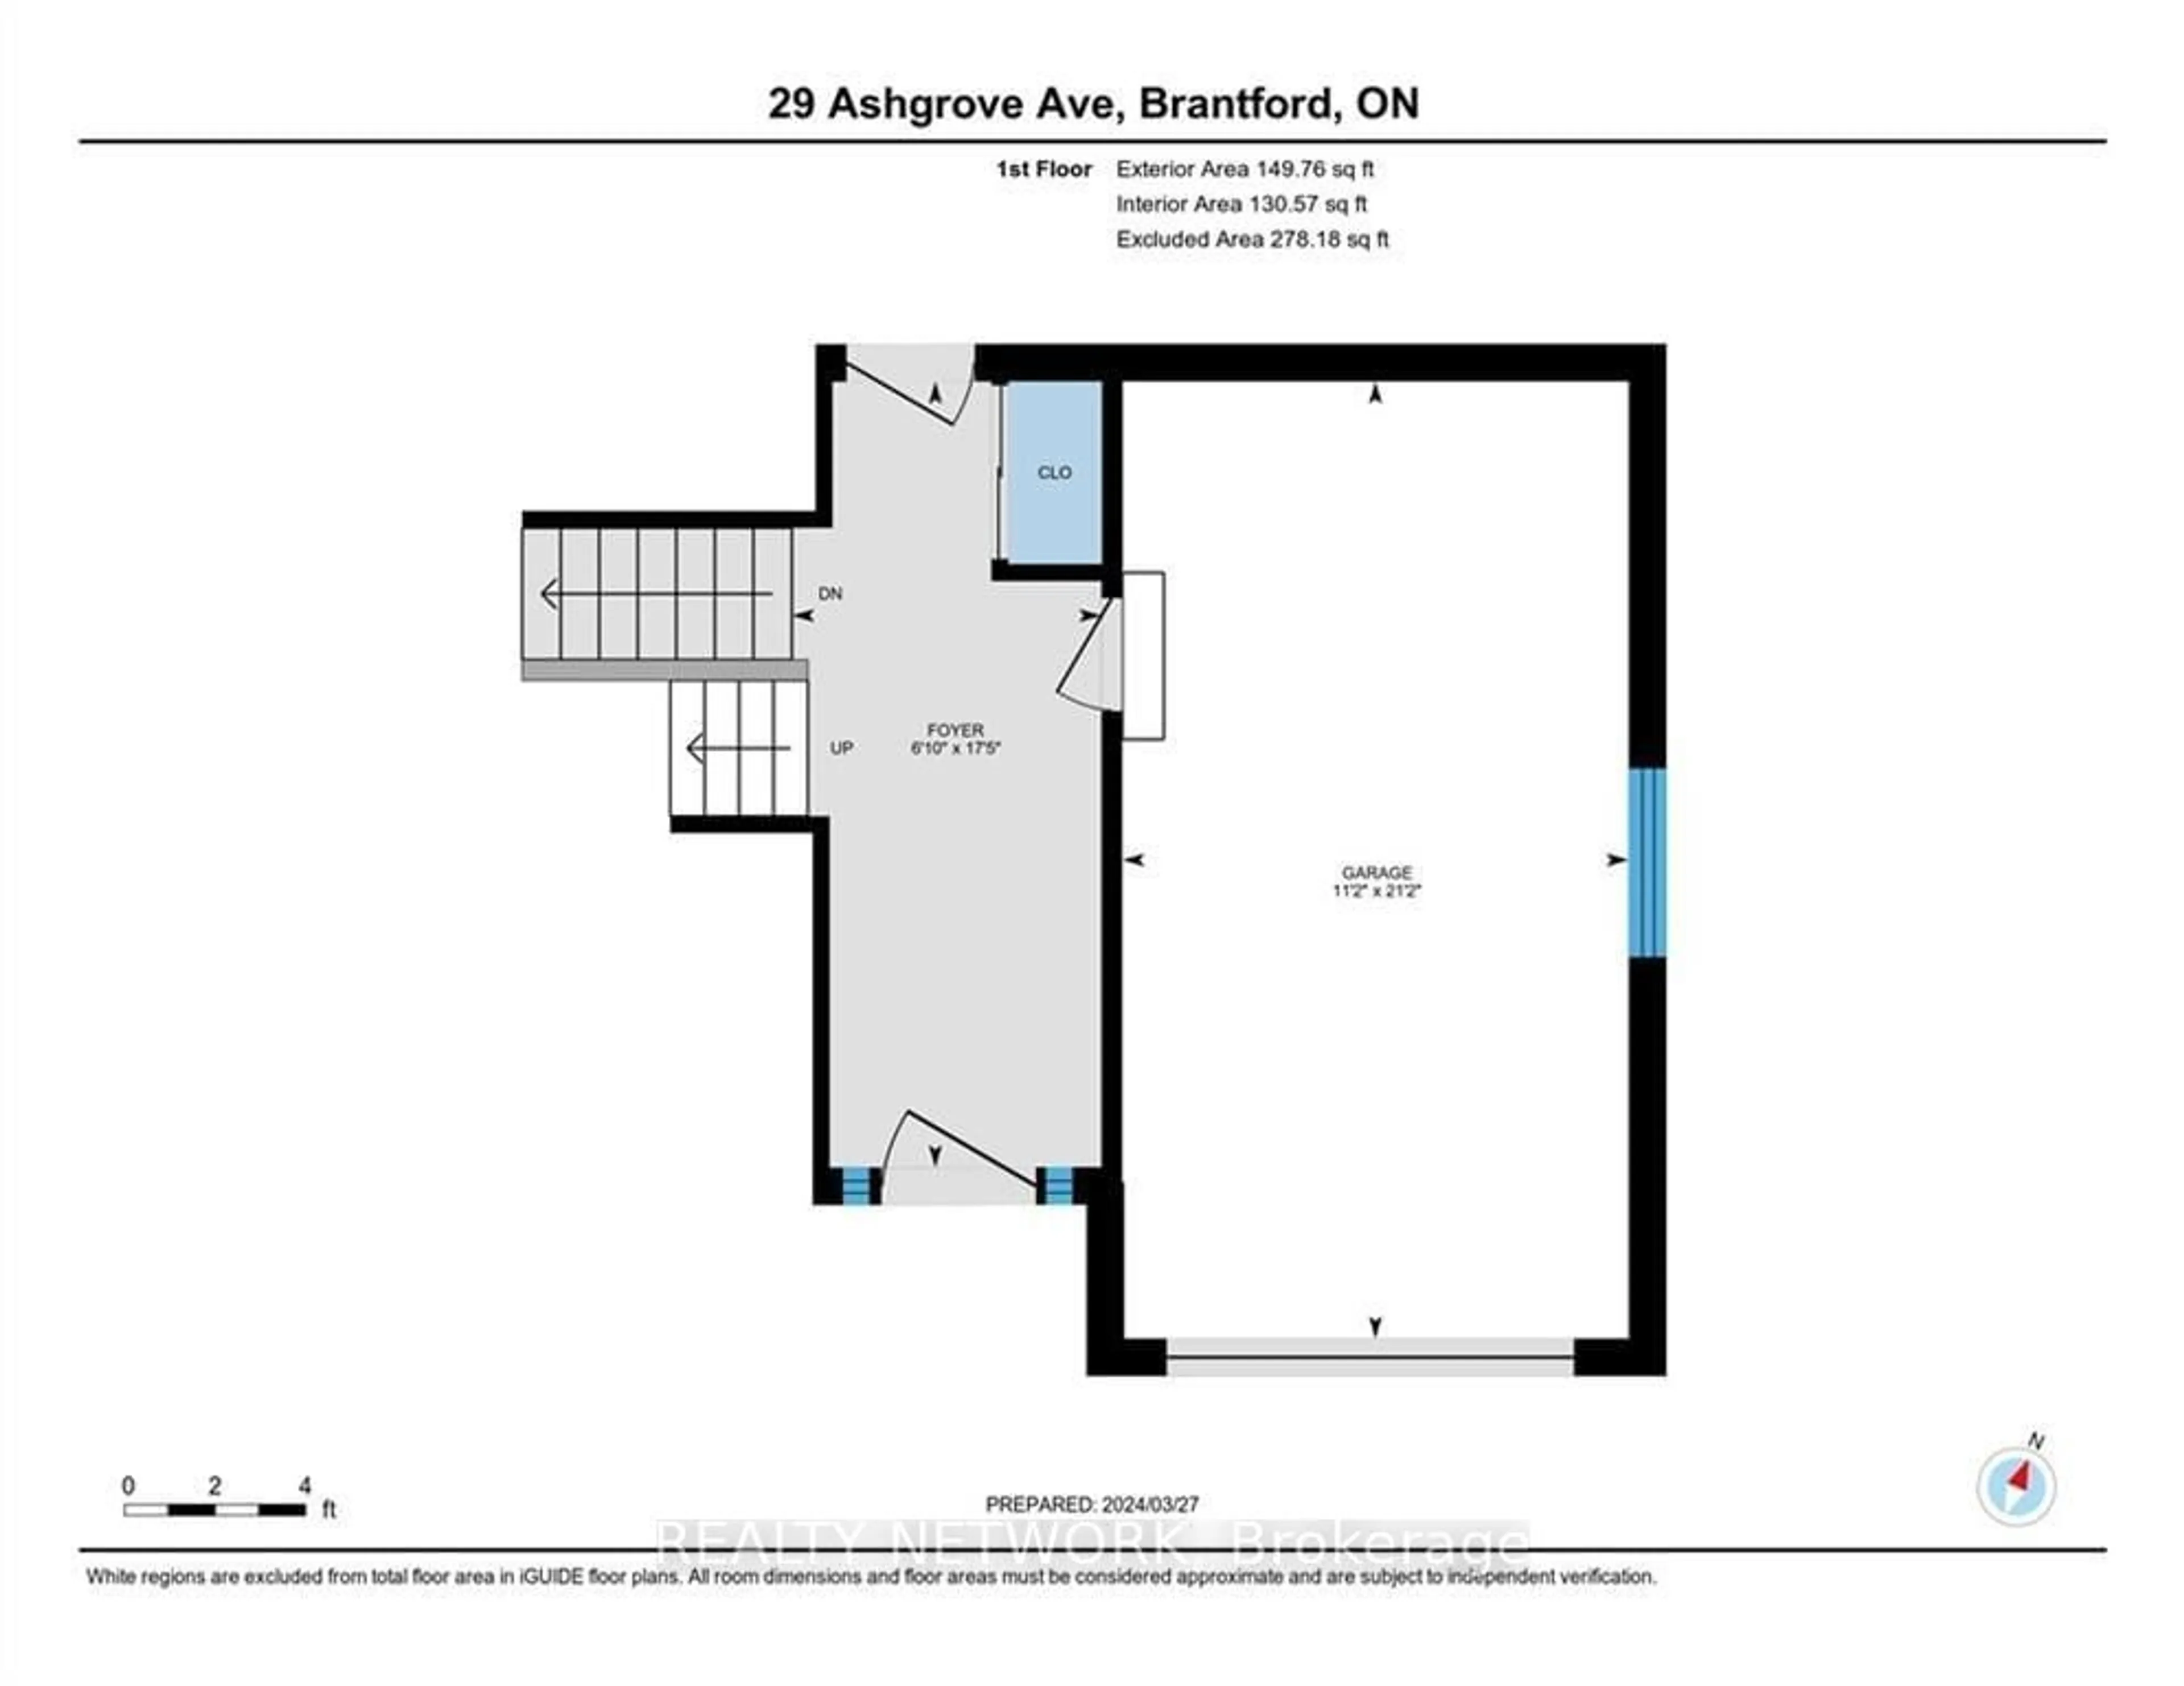 Floor plan for 29 Ashgrove Ave, Brantford Ontario N3R 6E1